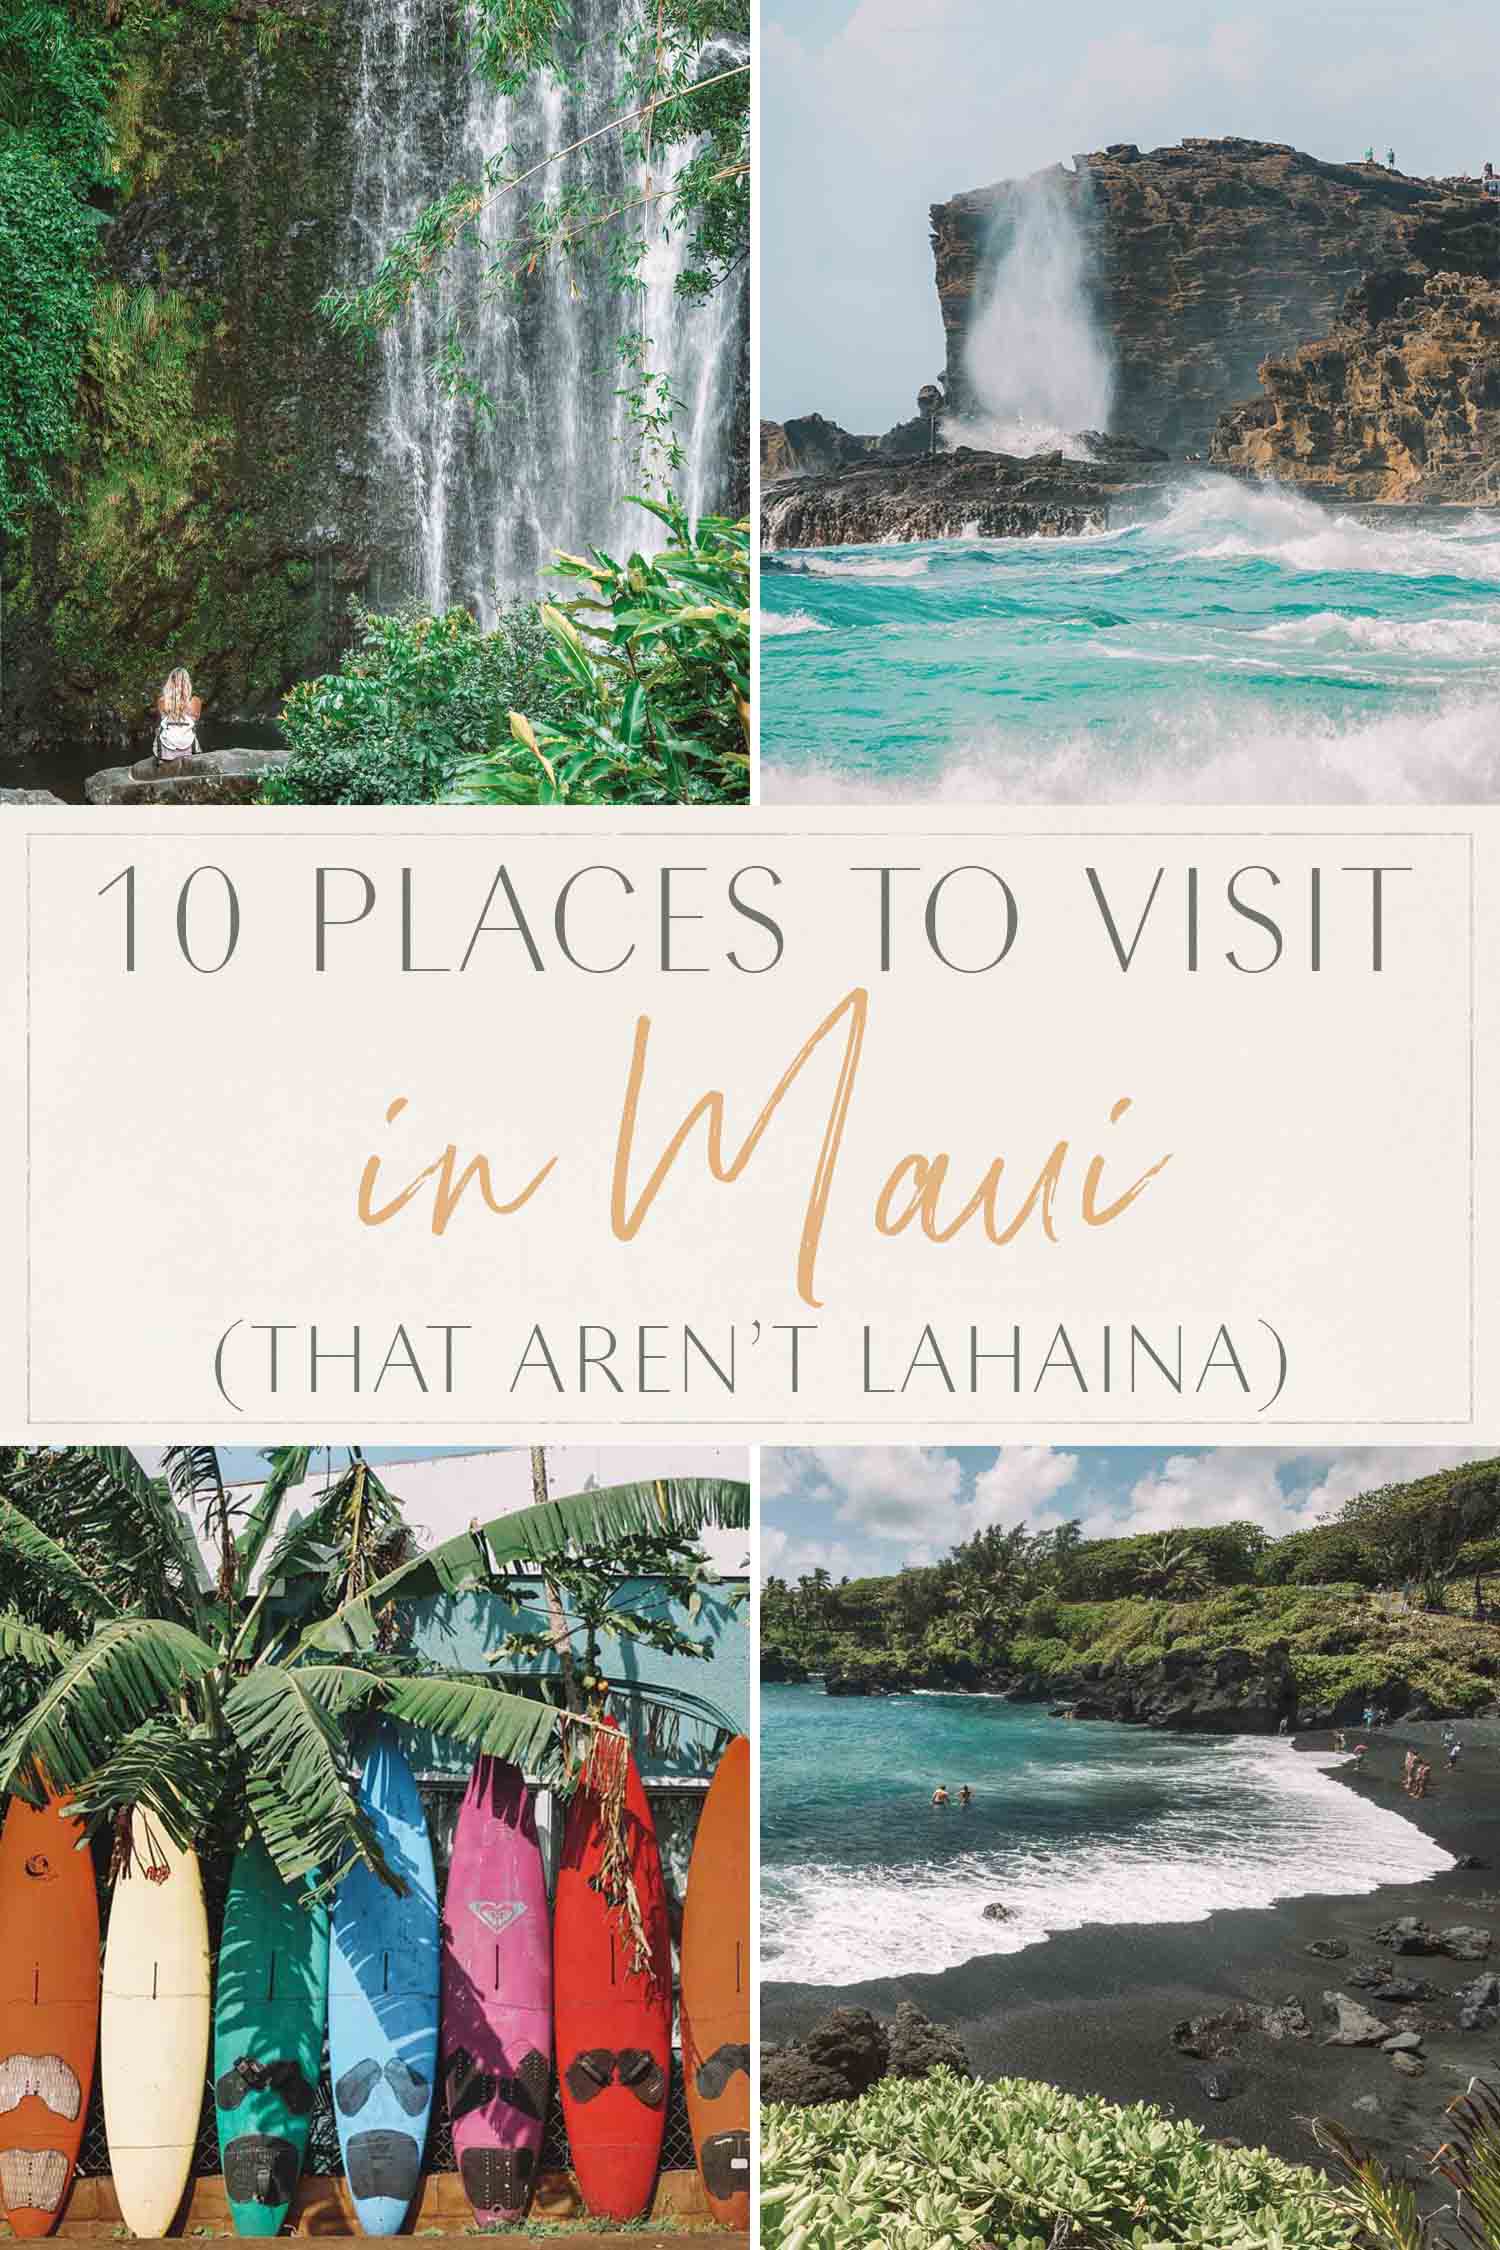 10 Places to Visit Maui That Aren't Lahaina